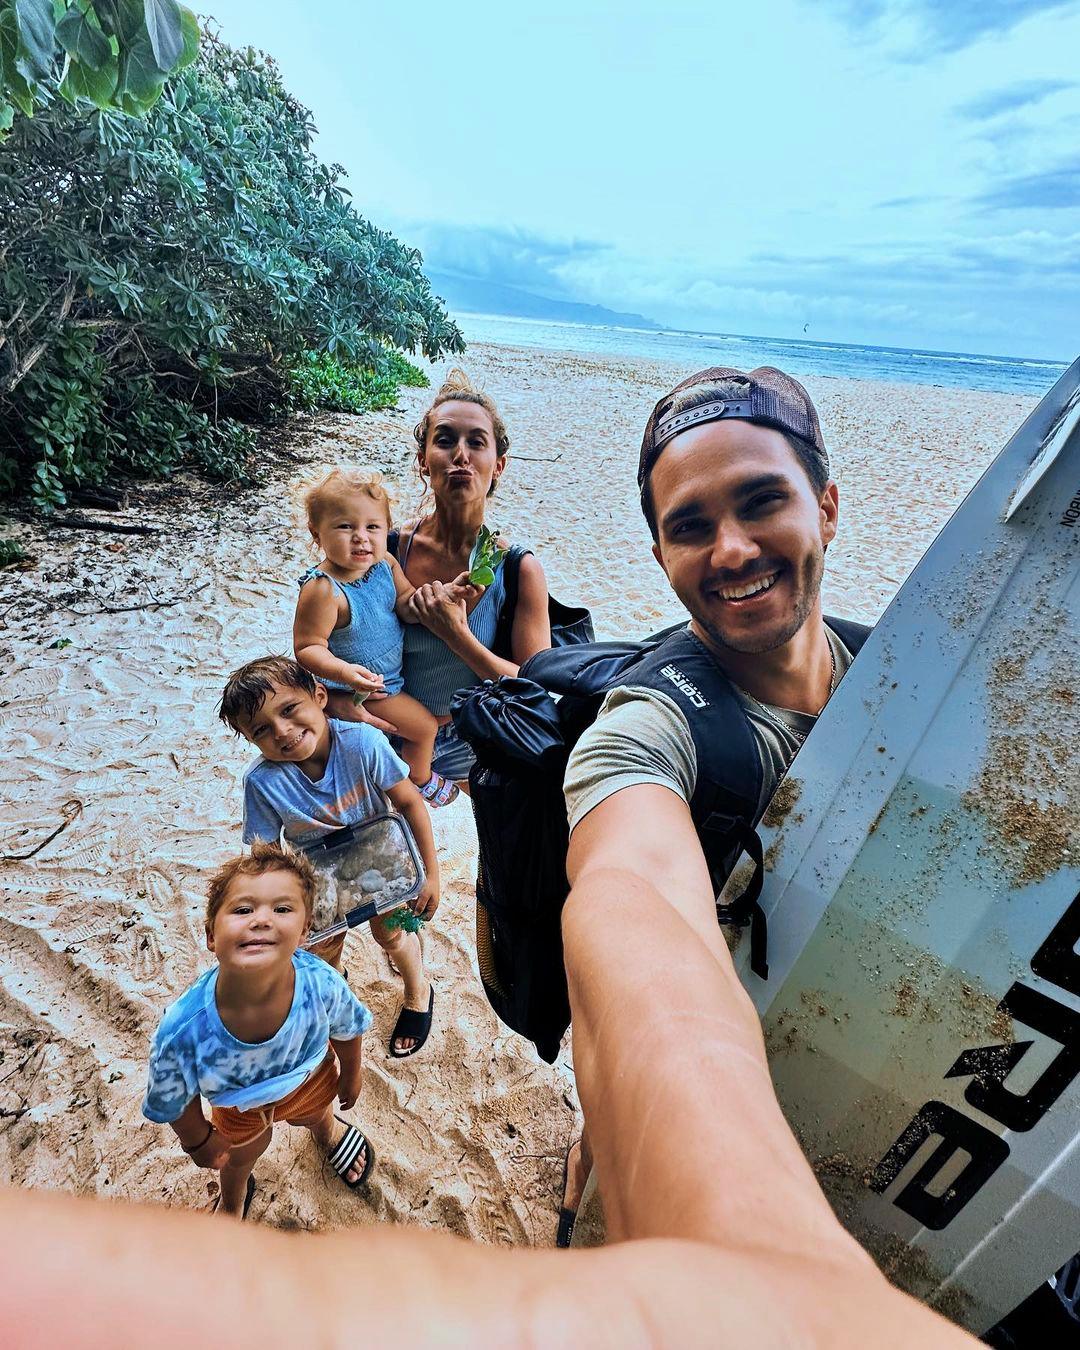 Hallmark star Alexa PenaVega shares beautiful family photos on Instagram